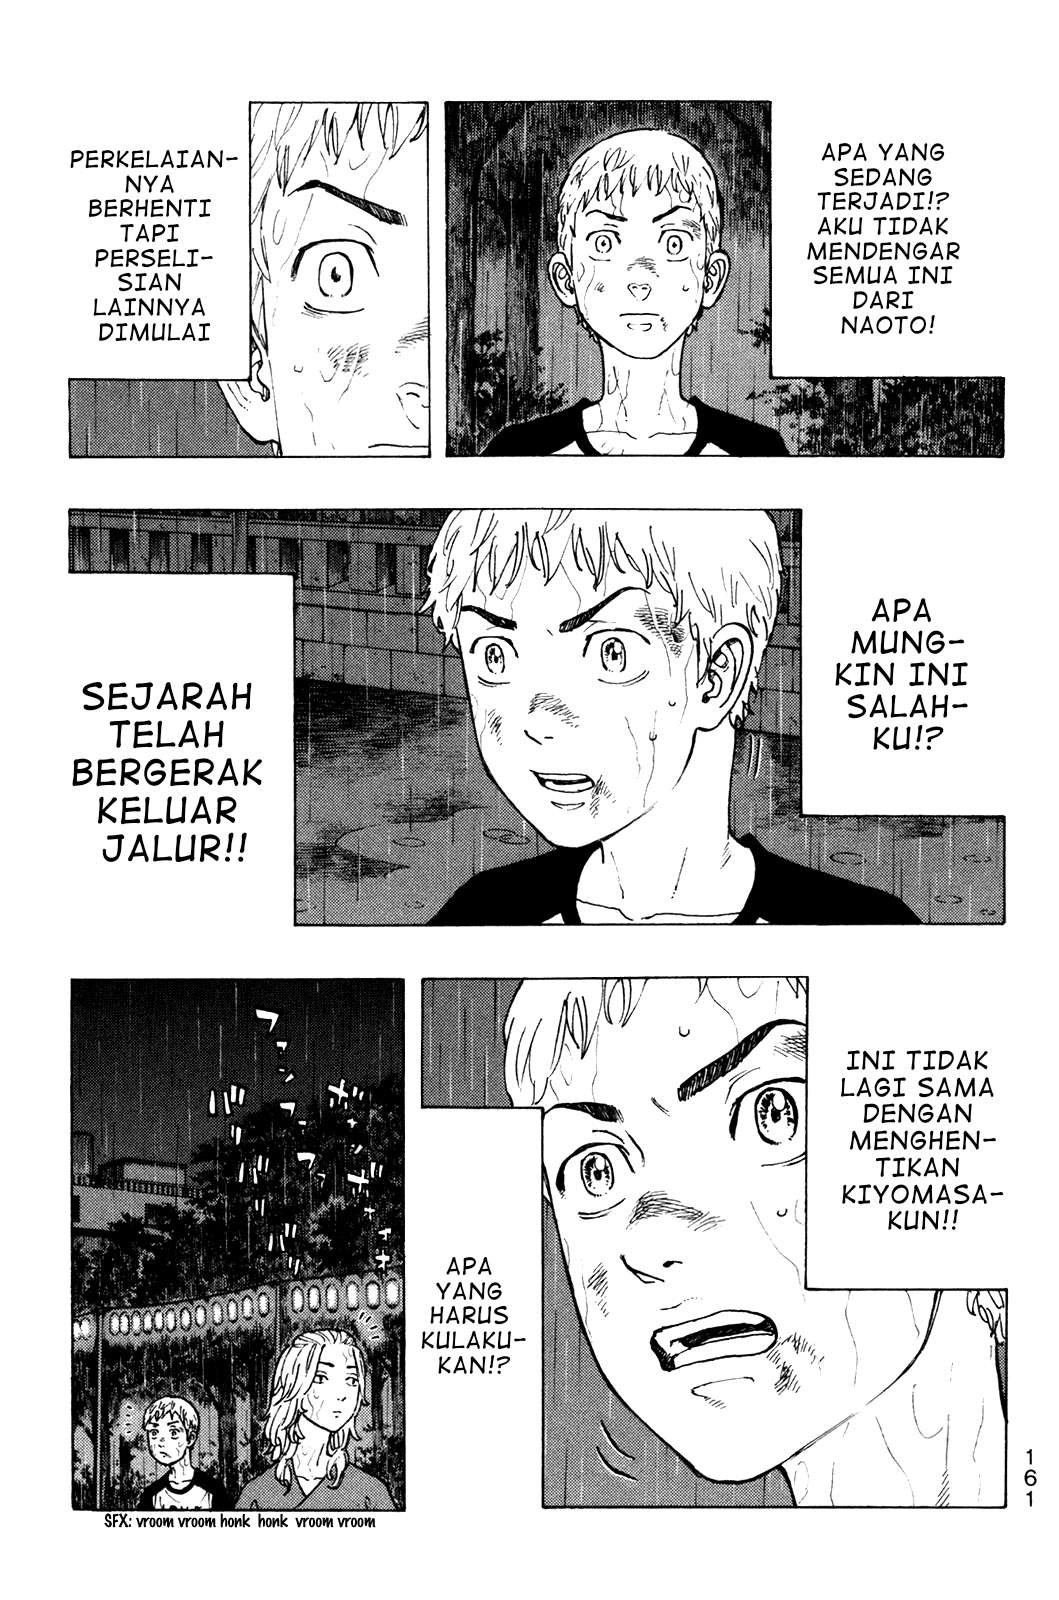 Tokyo Revengers Chapter 22 Bahasa Indonesia